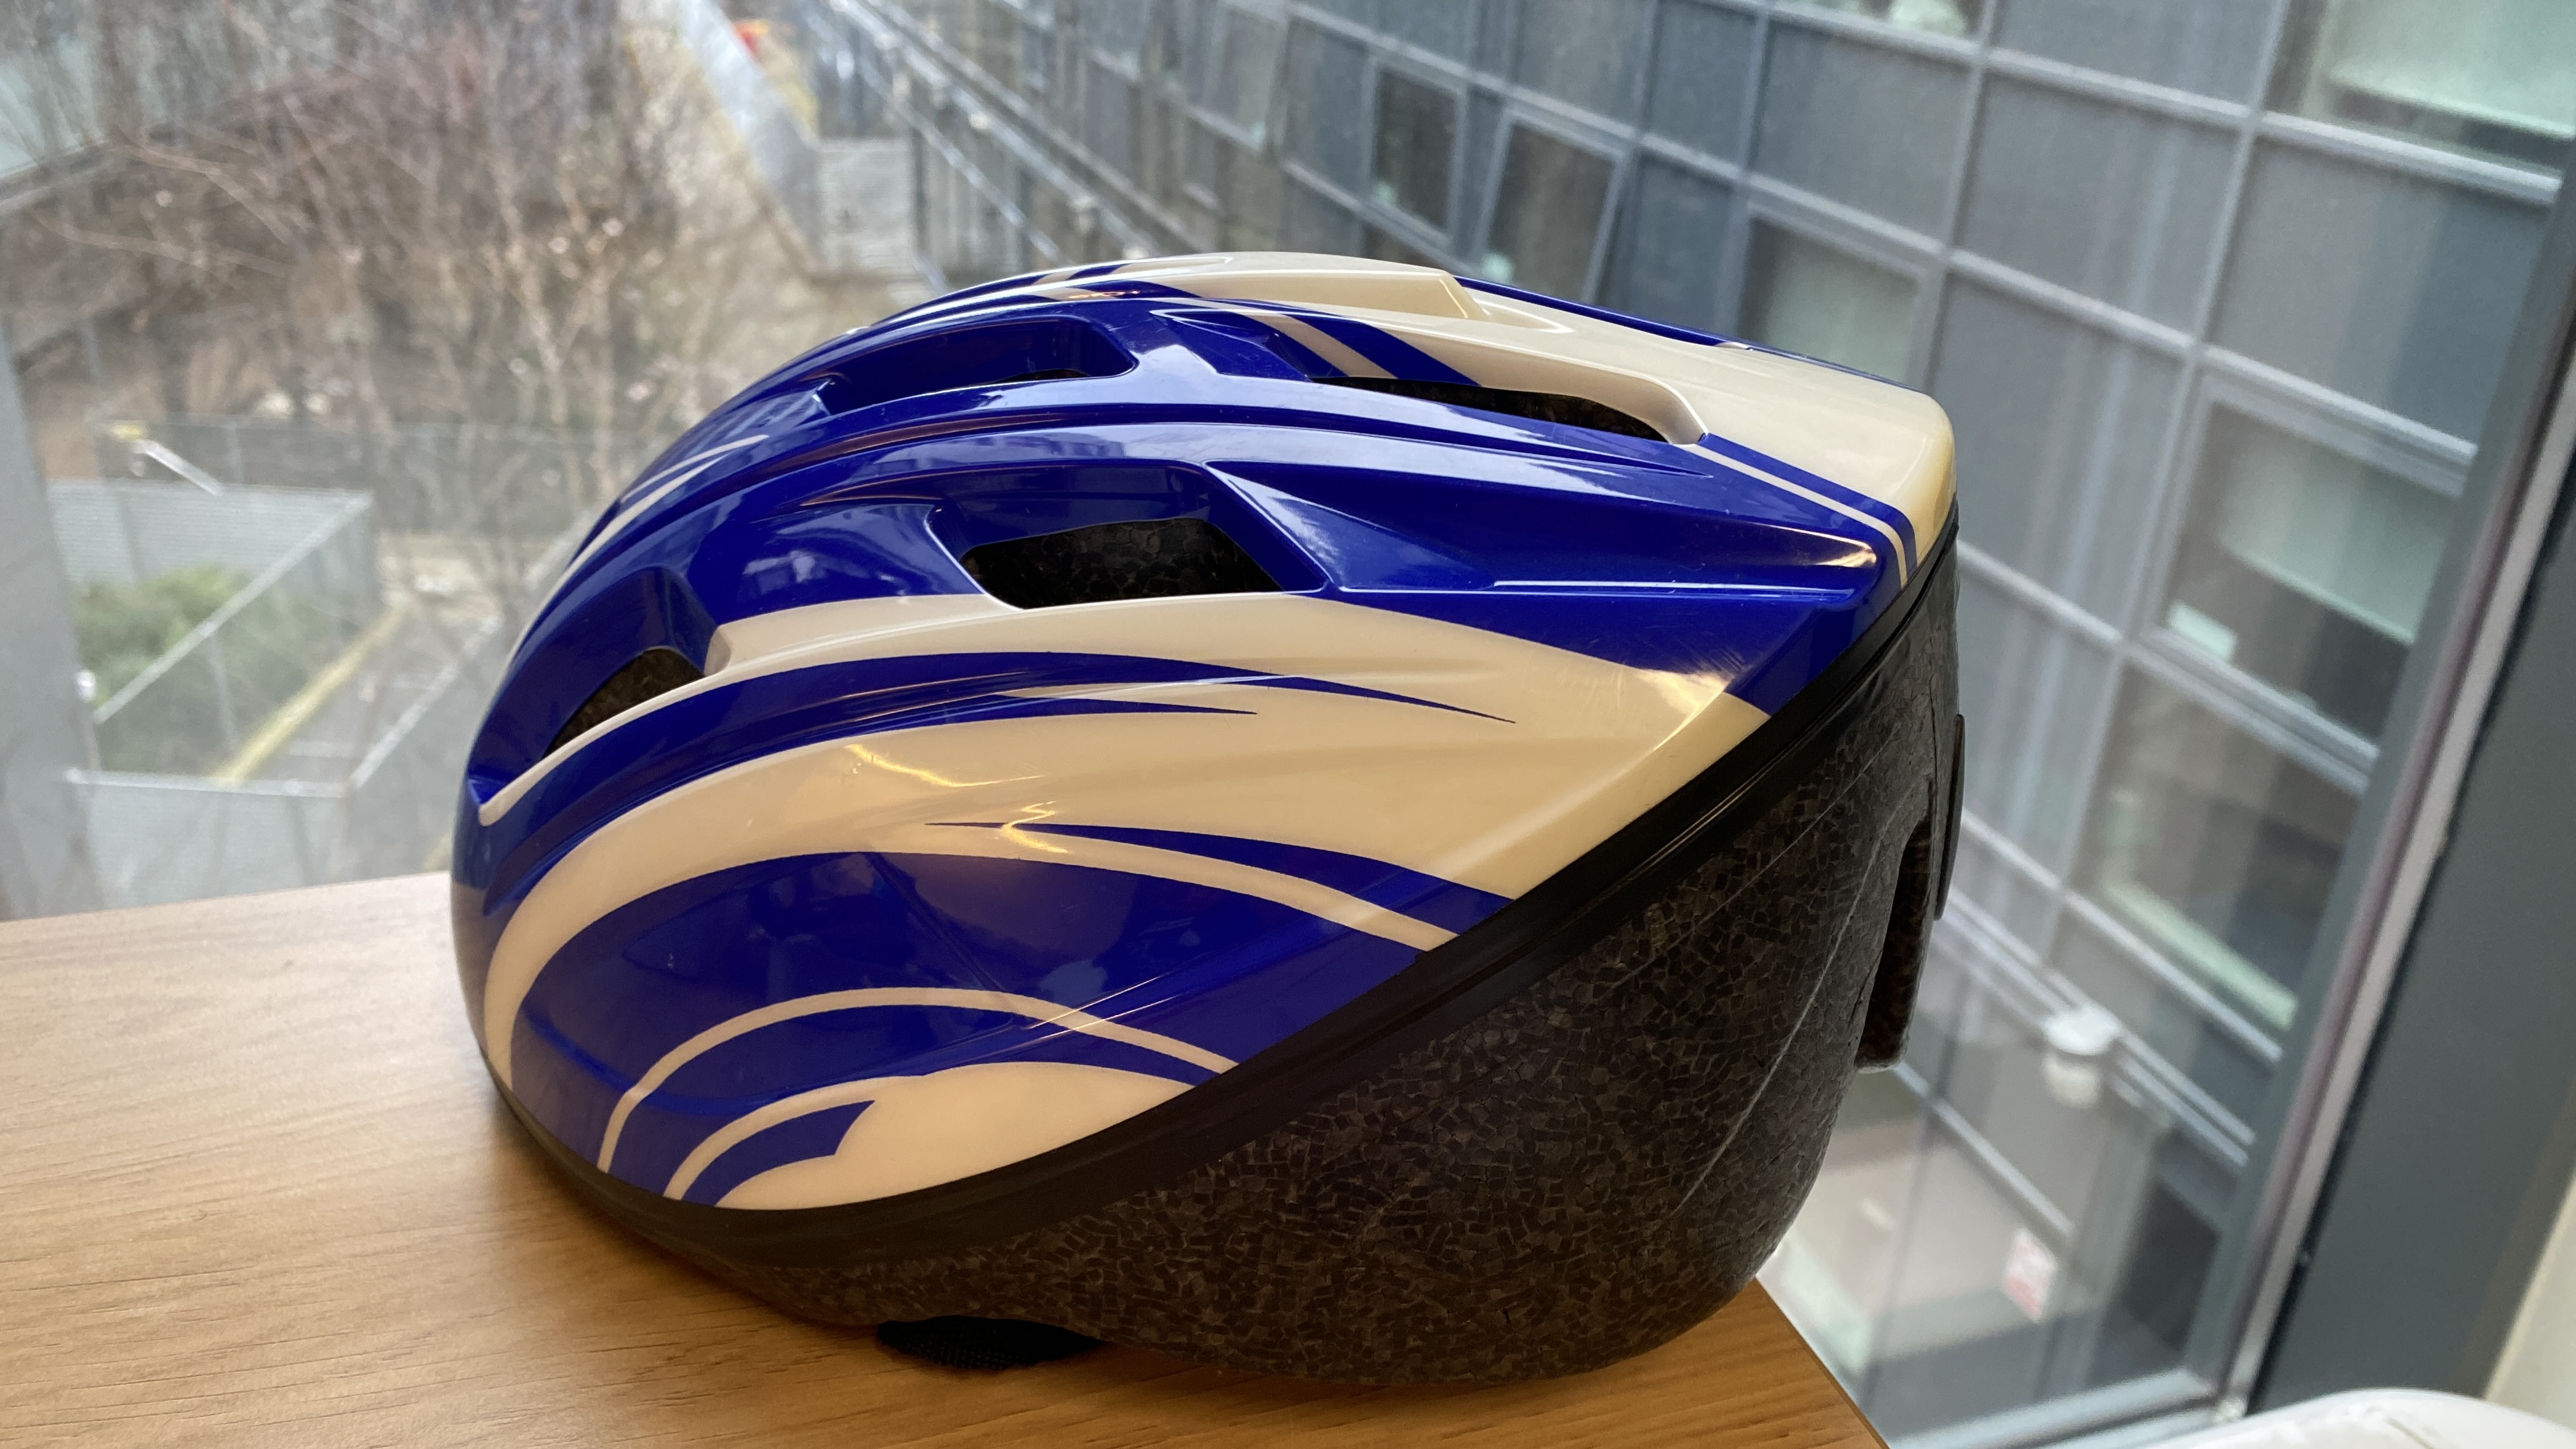 Blue bike helmet